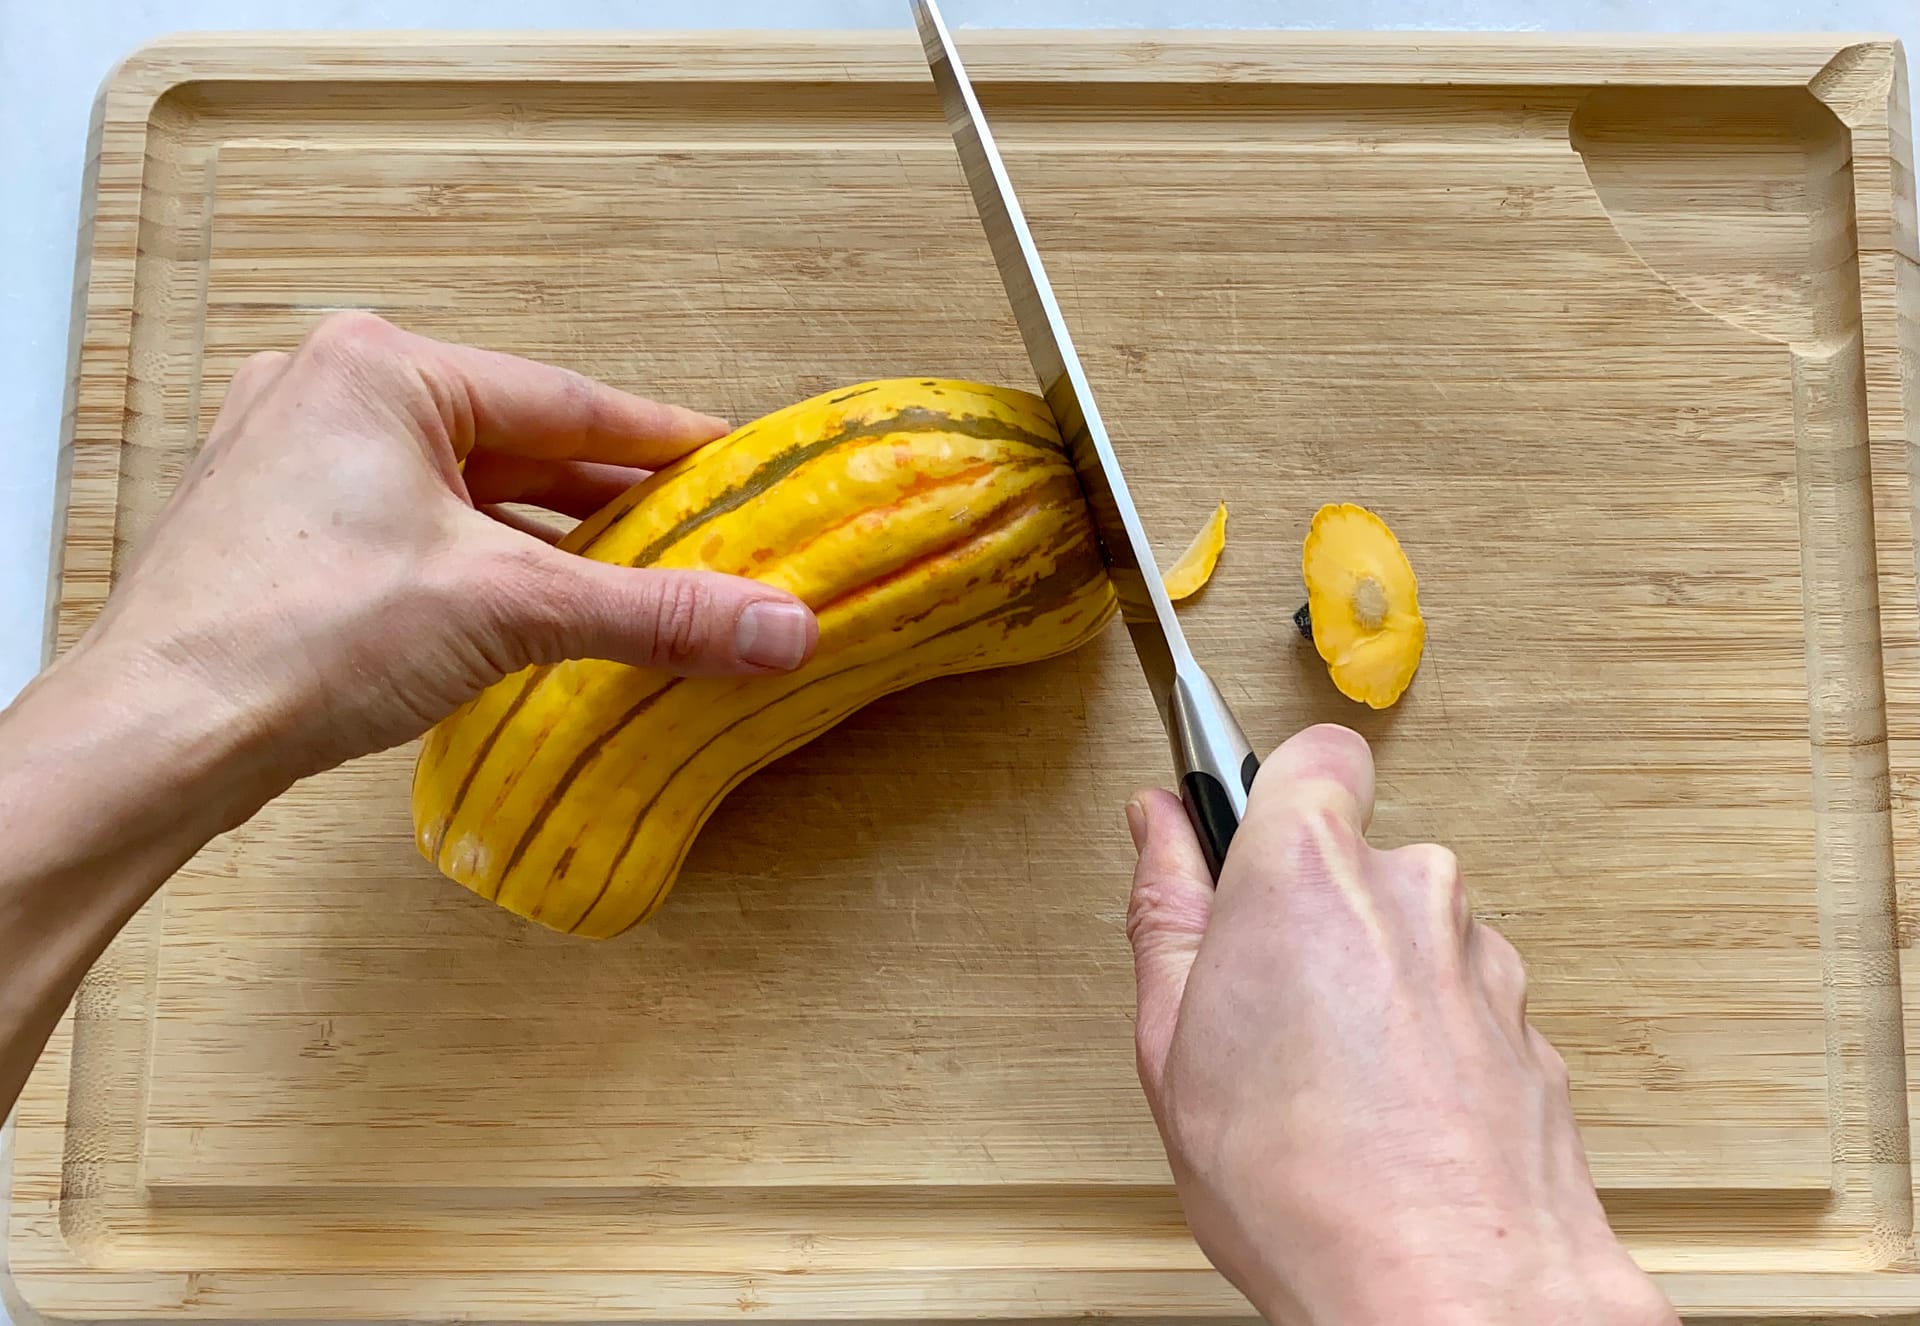 Preparing delicata squash. Begin by slicing off ends.